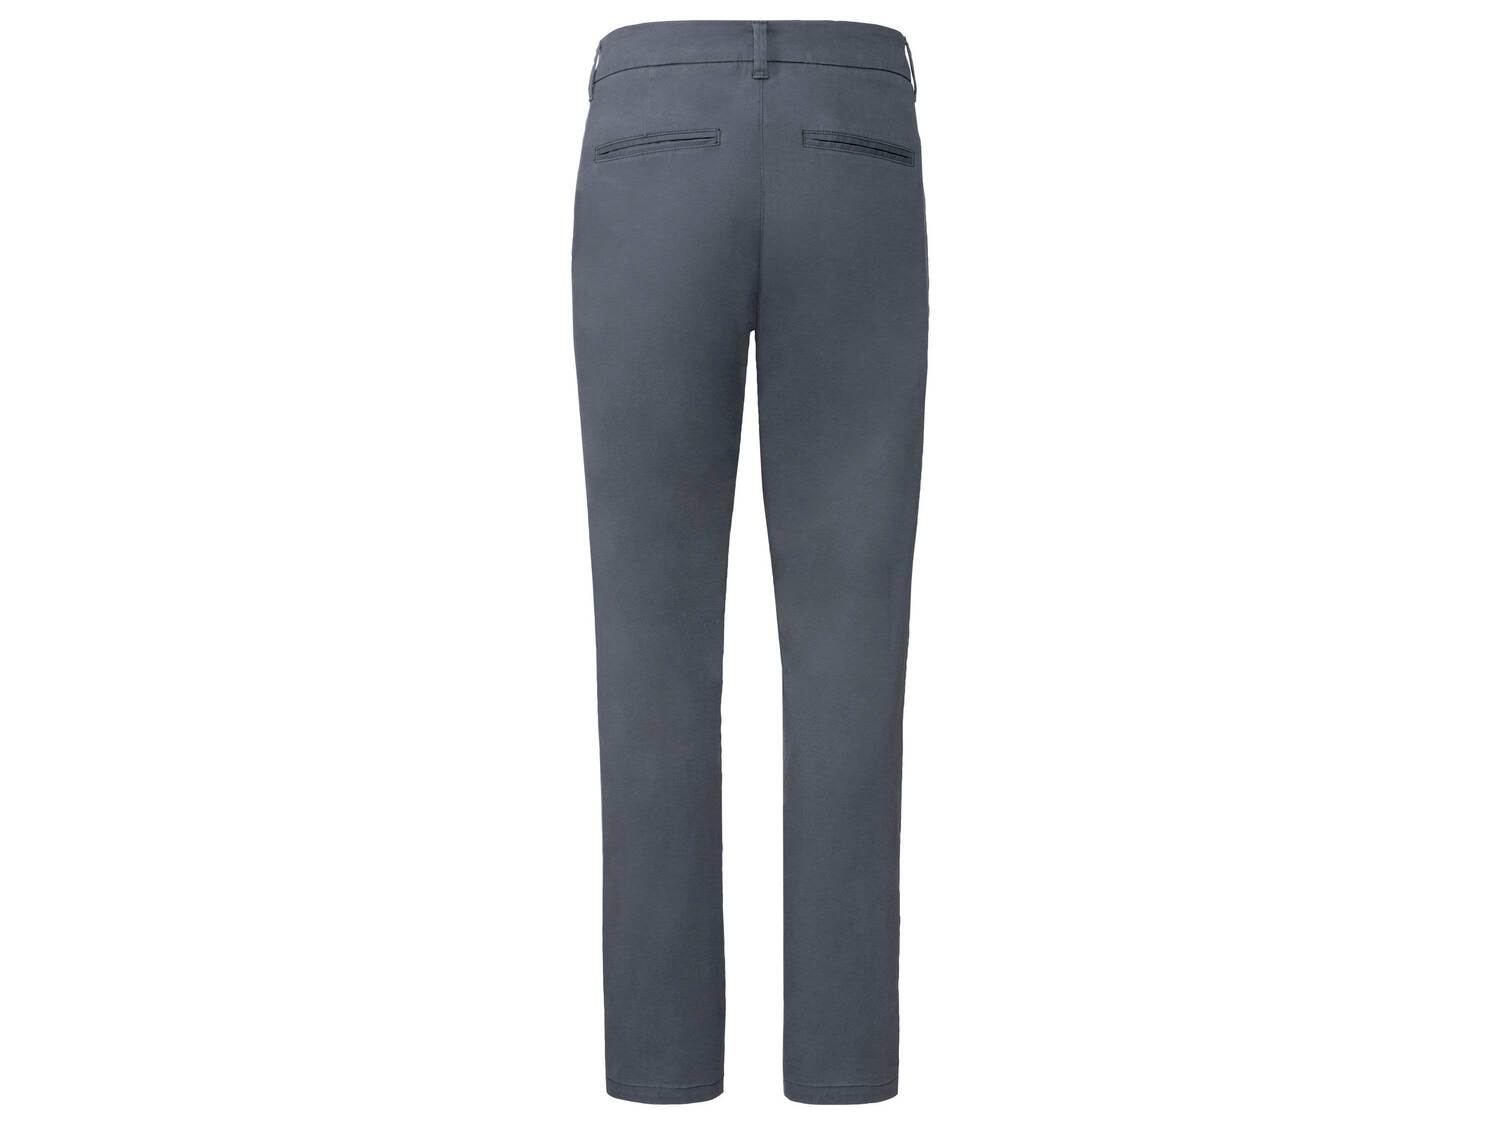 Spodnie męskie chinosy Livergy, cena 44,99 PLN 
- rozmiary: 50-56
- 98% bawełny, ...